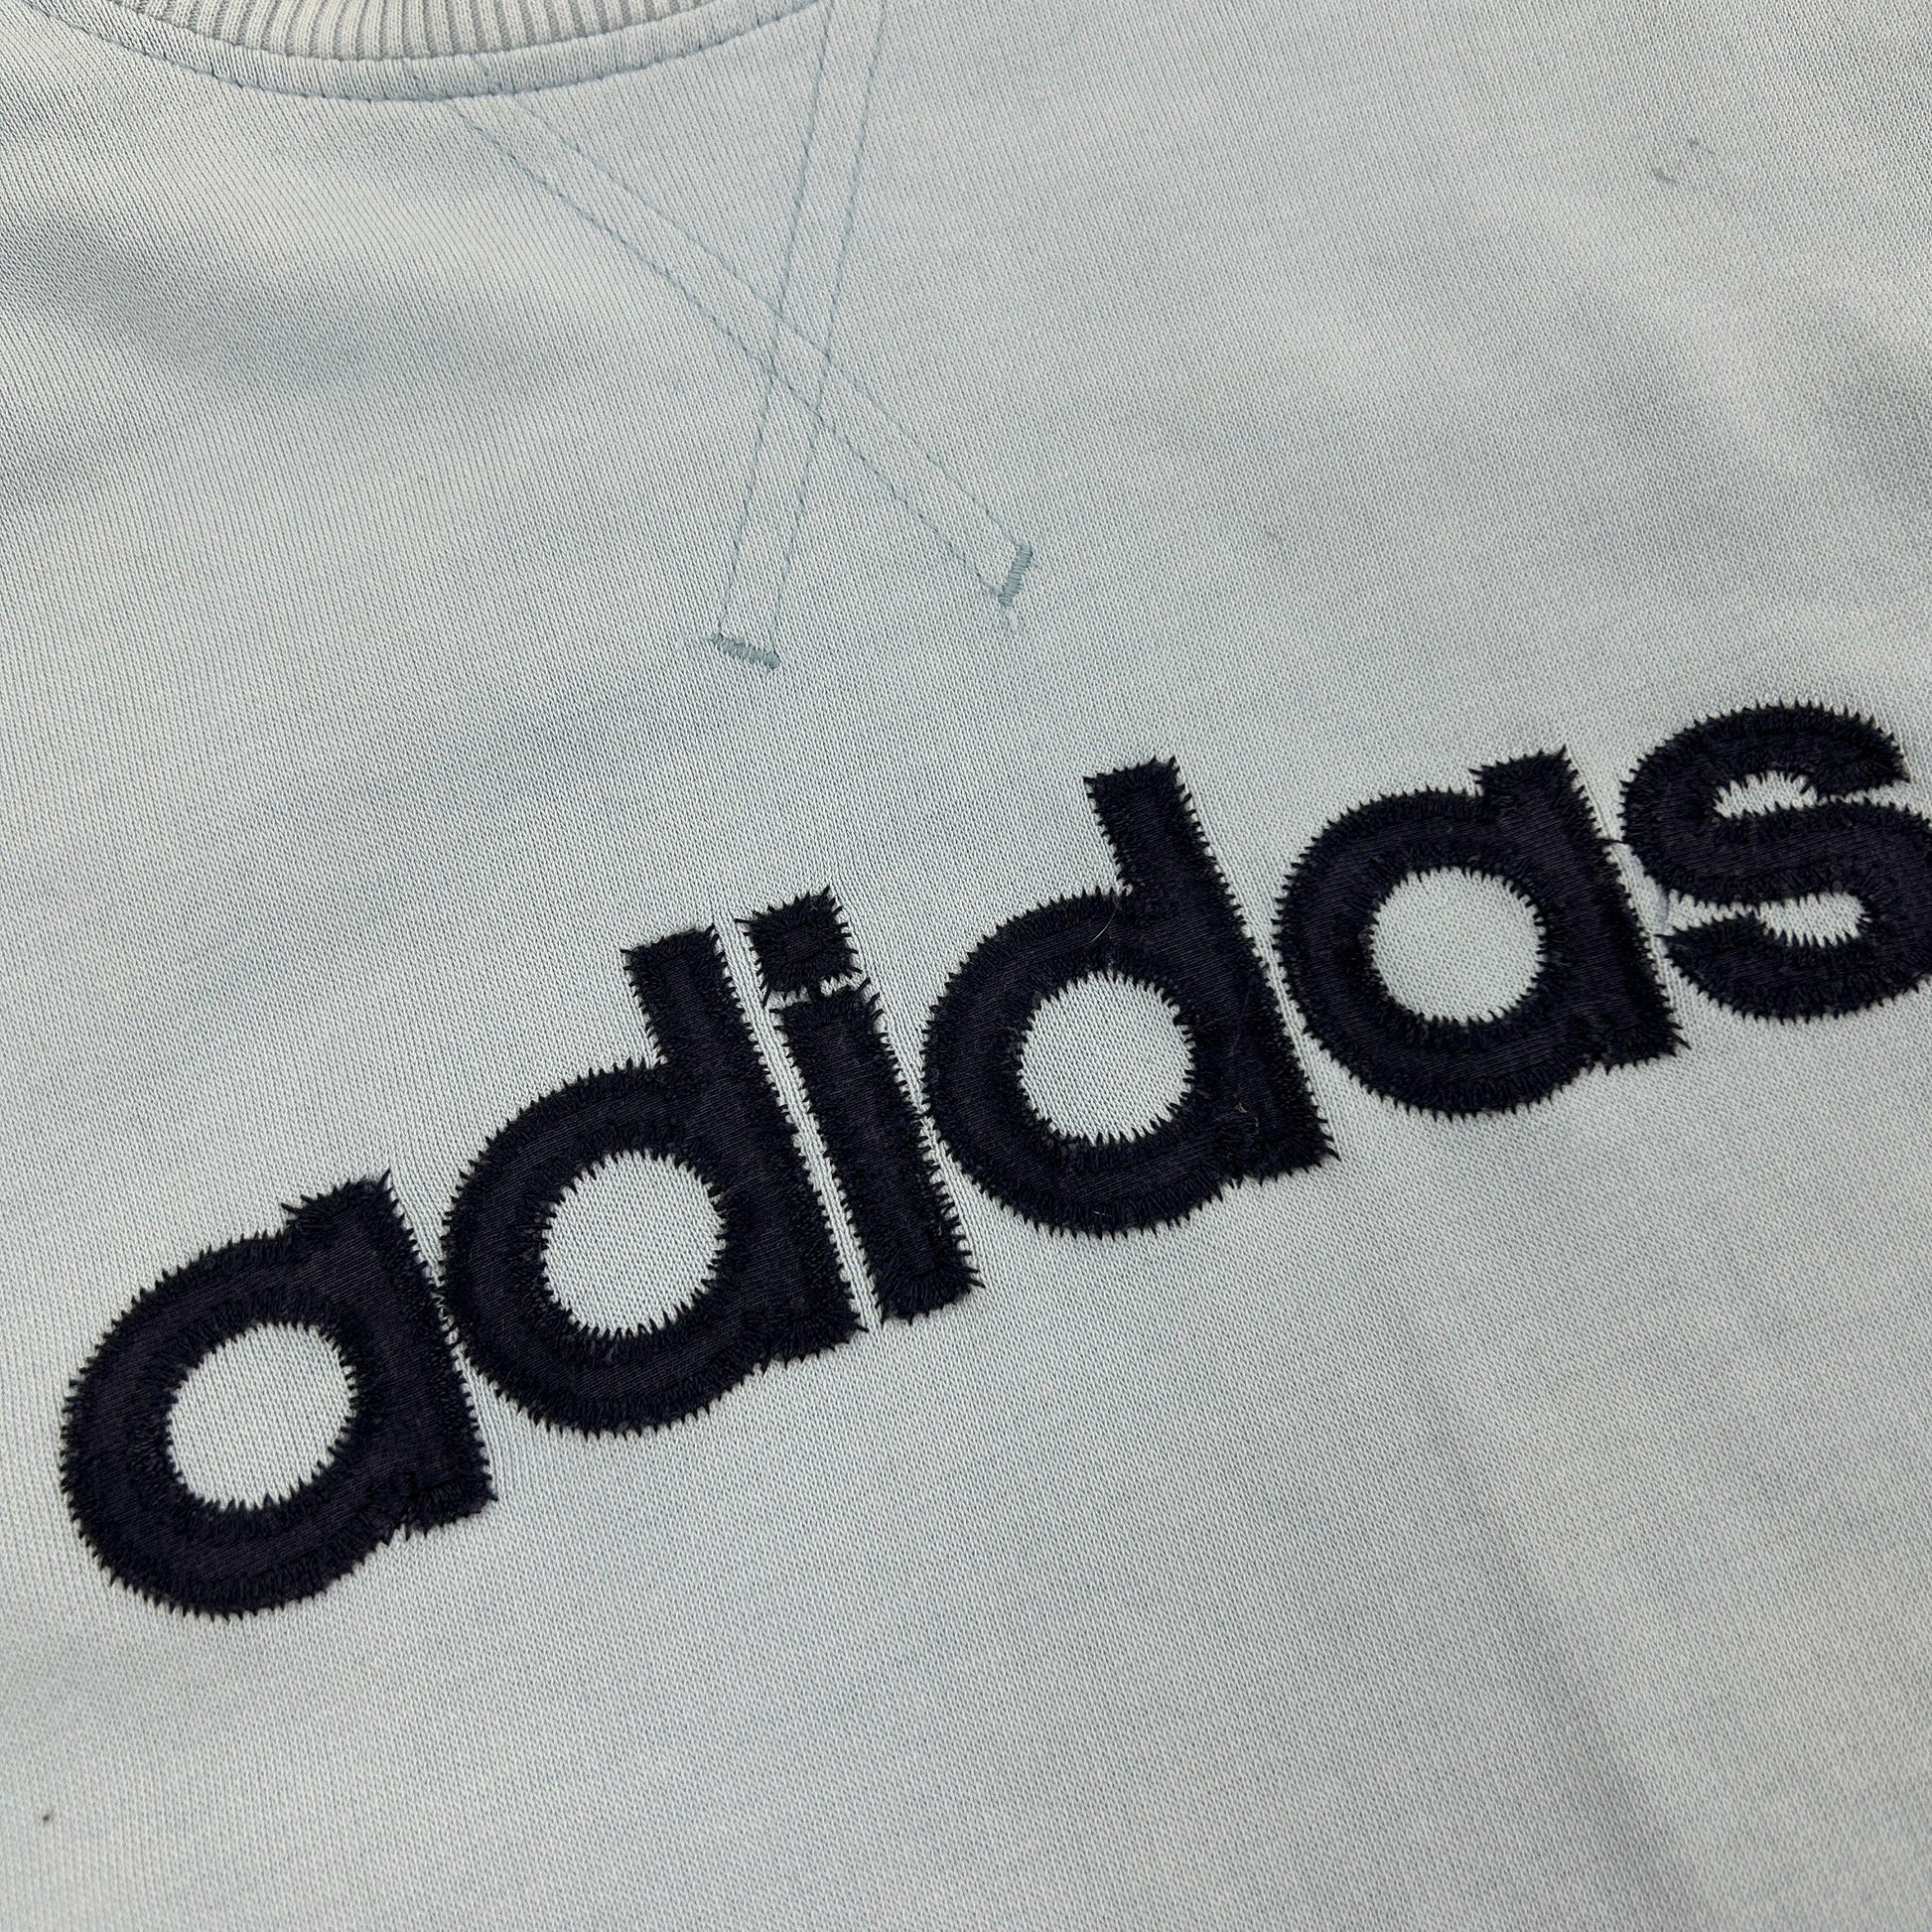 Vintage Adidas Logo Sweatshirt Size XL - Known Source